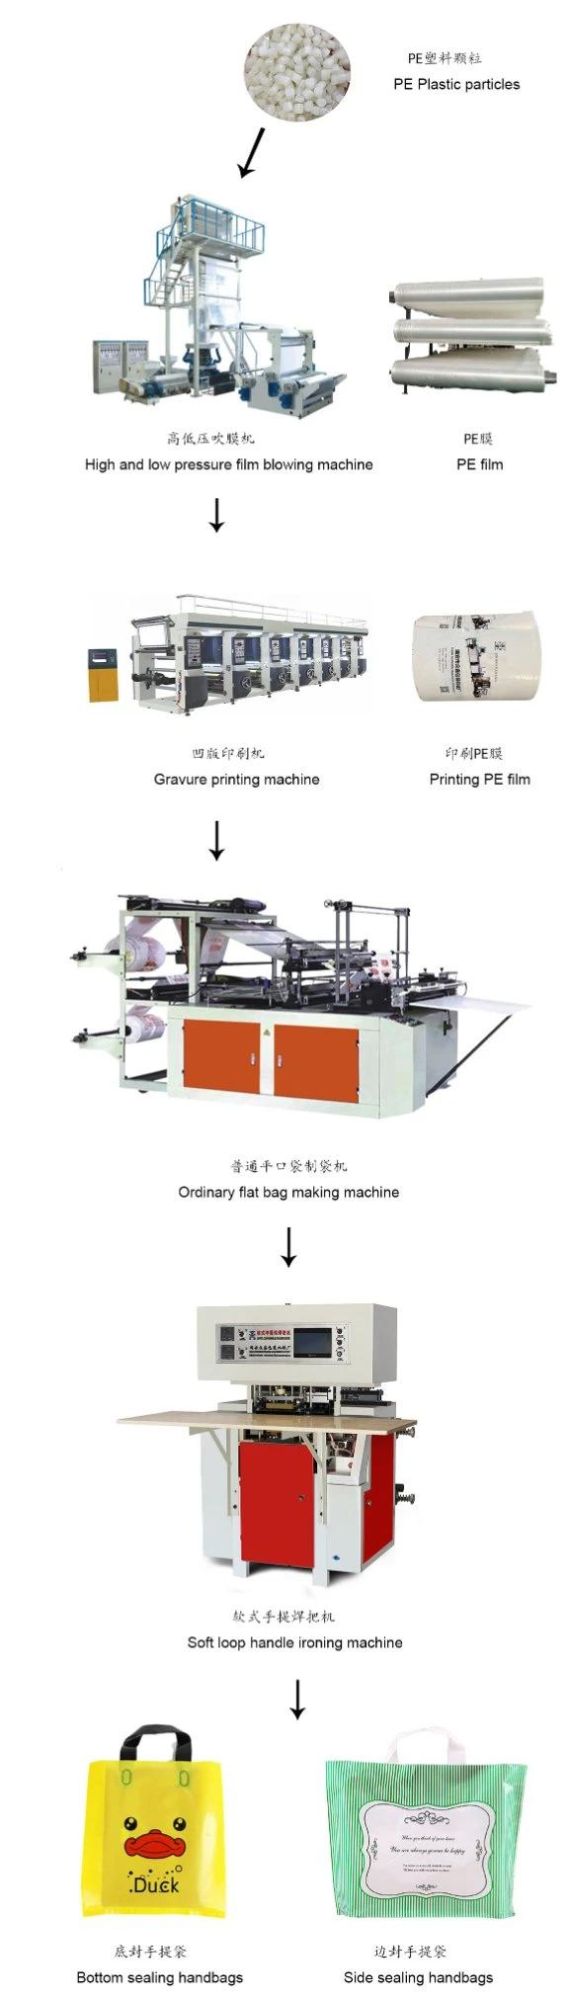 Zhongxin Wenzhou Biodegradable Carry Bag Welding Machine Plastic Handle Ironing Machine